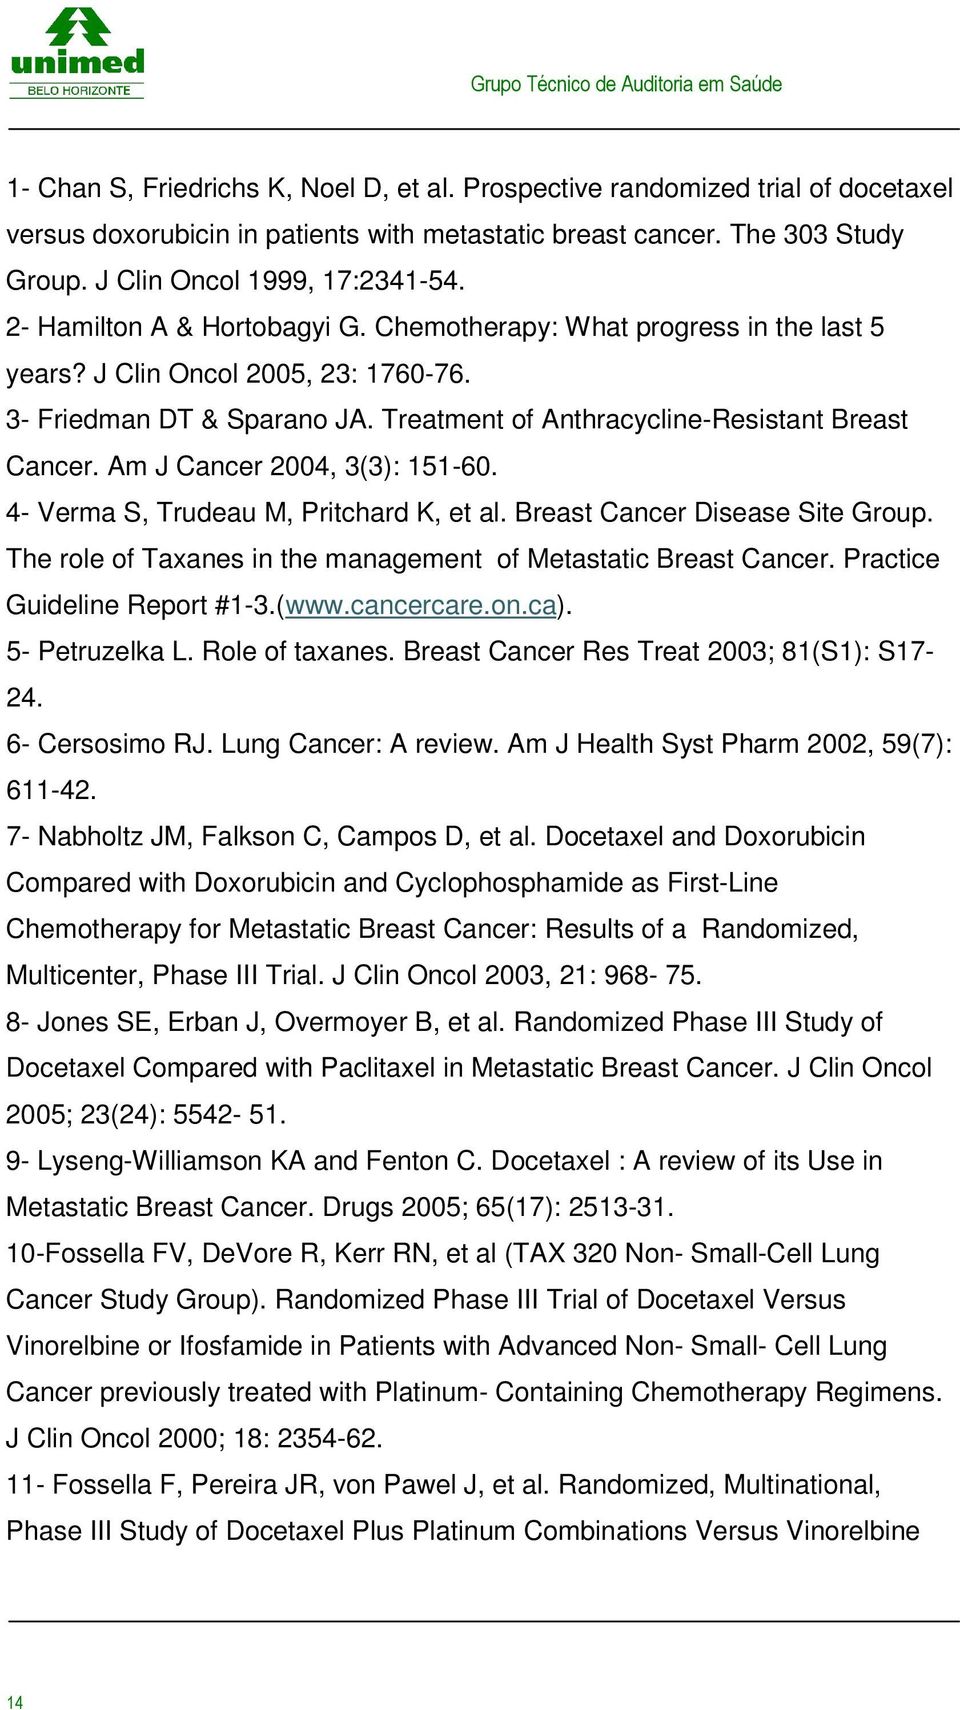 J Clin Oncol 2005, 23: 1760-76 3- Friedman DT & Sparano JA Treatment of Anthracycline-Resistant Breast Cancer Am J Cancer 2004, 3(3): 151-60 4- Verma S, Trudeau M, Pritchard K, et al Breast Cancer